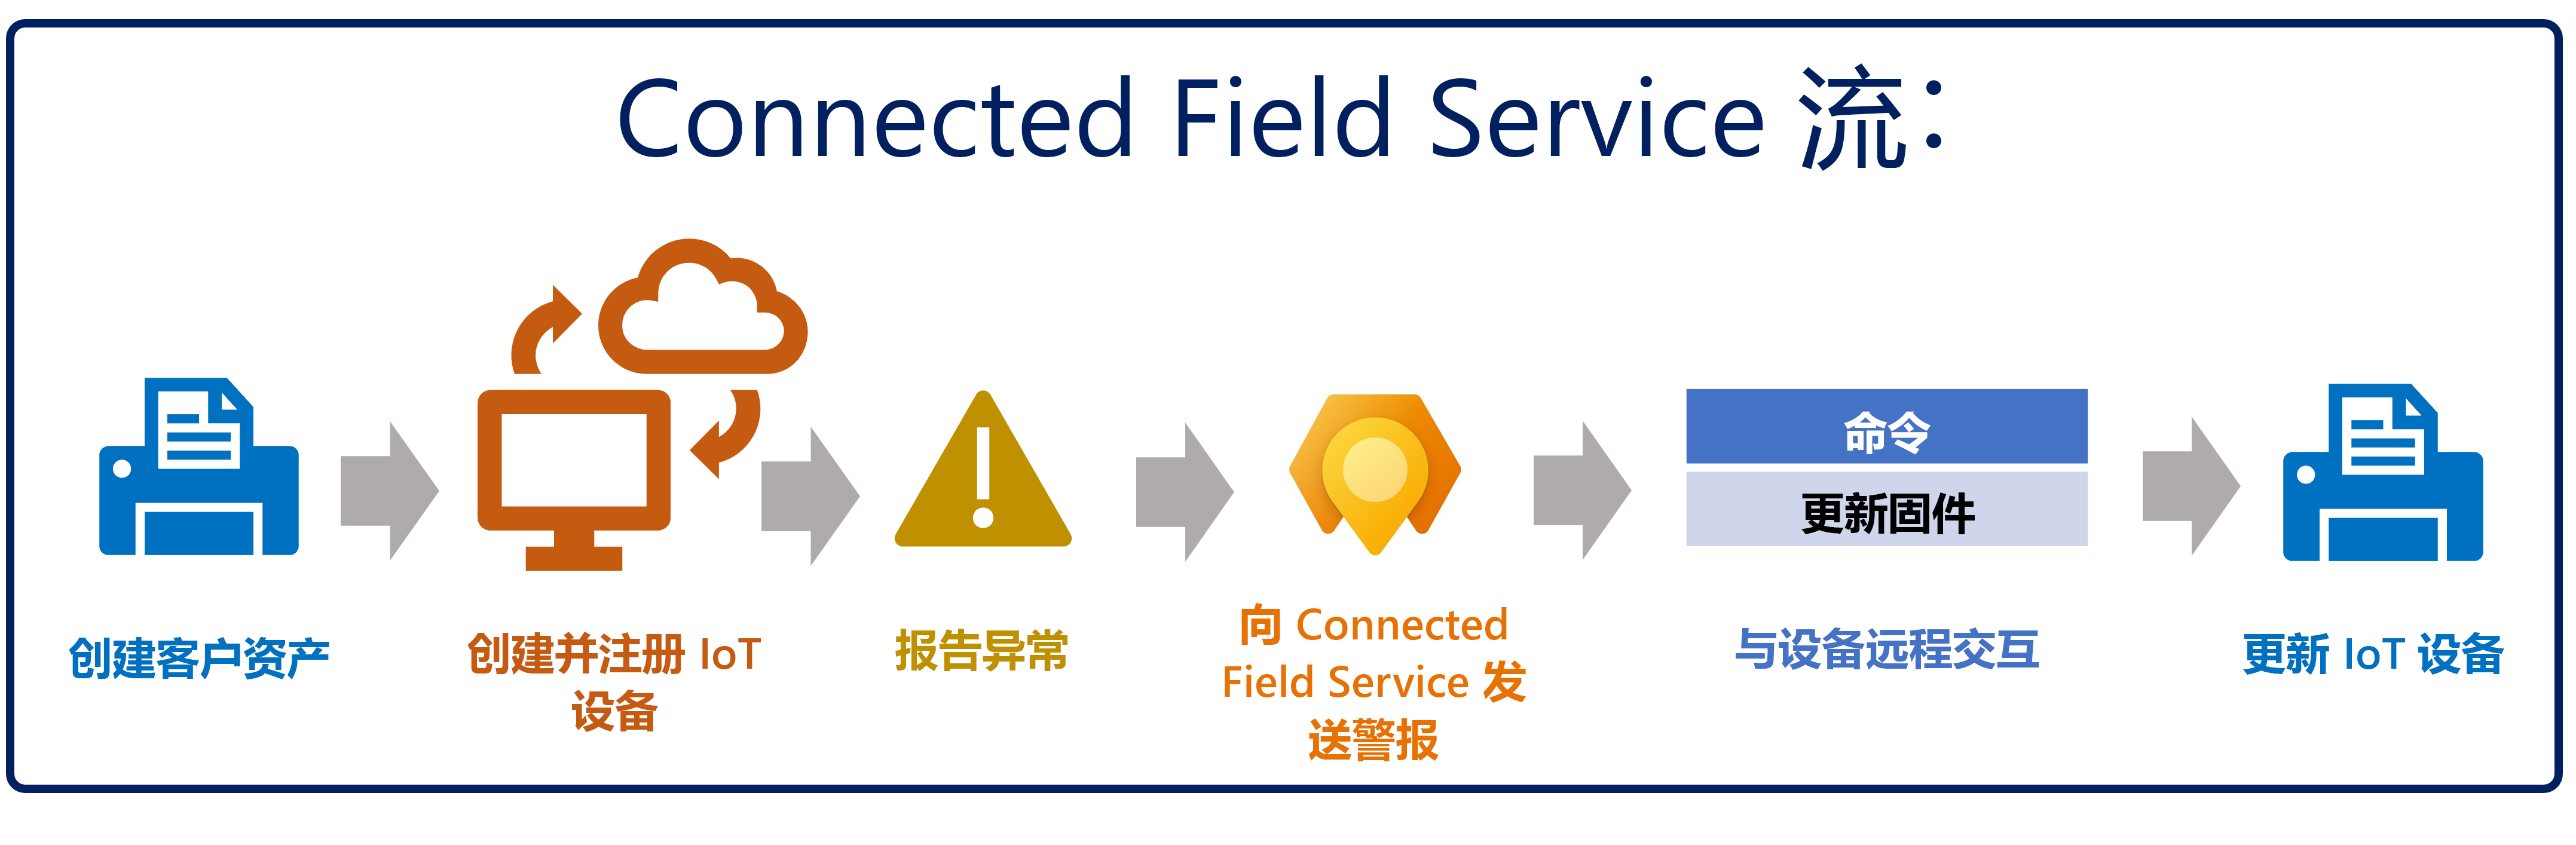 Connected Field Service 流程的示意图，其中检测到某个 IoT 设备的异常并远程对其进行了更新。